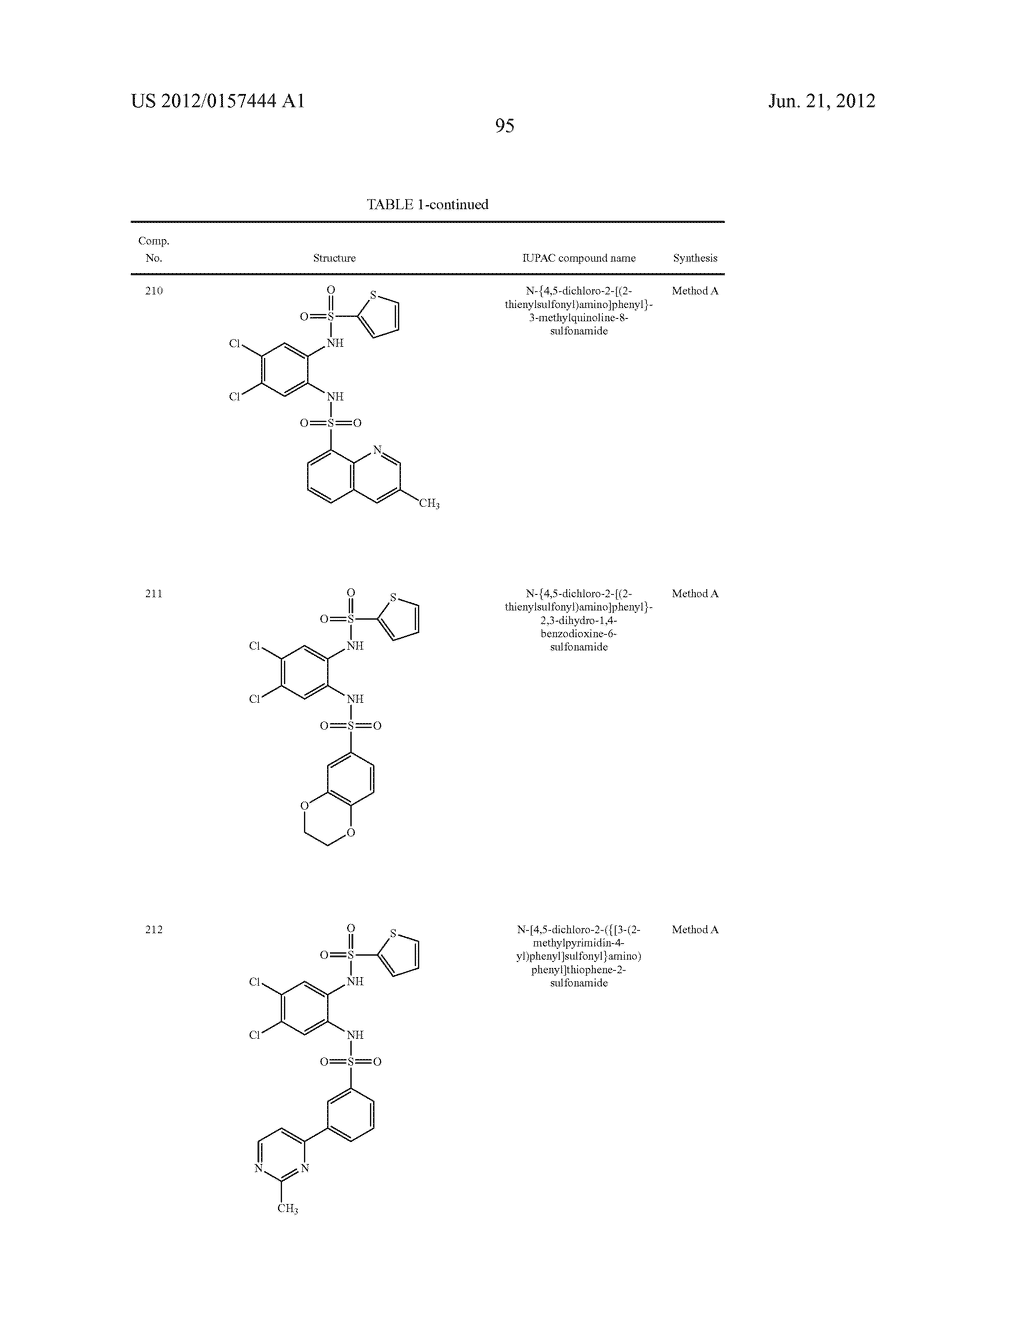 NOVEL 1,2- BIS-SULFONAMIDE DERIVATIVES AS CHEMOKINE RECEPTOR MODULATORS - diagram, schematic, and image 96